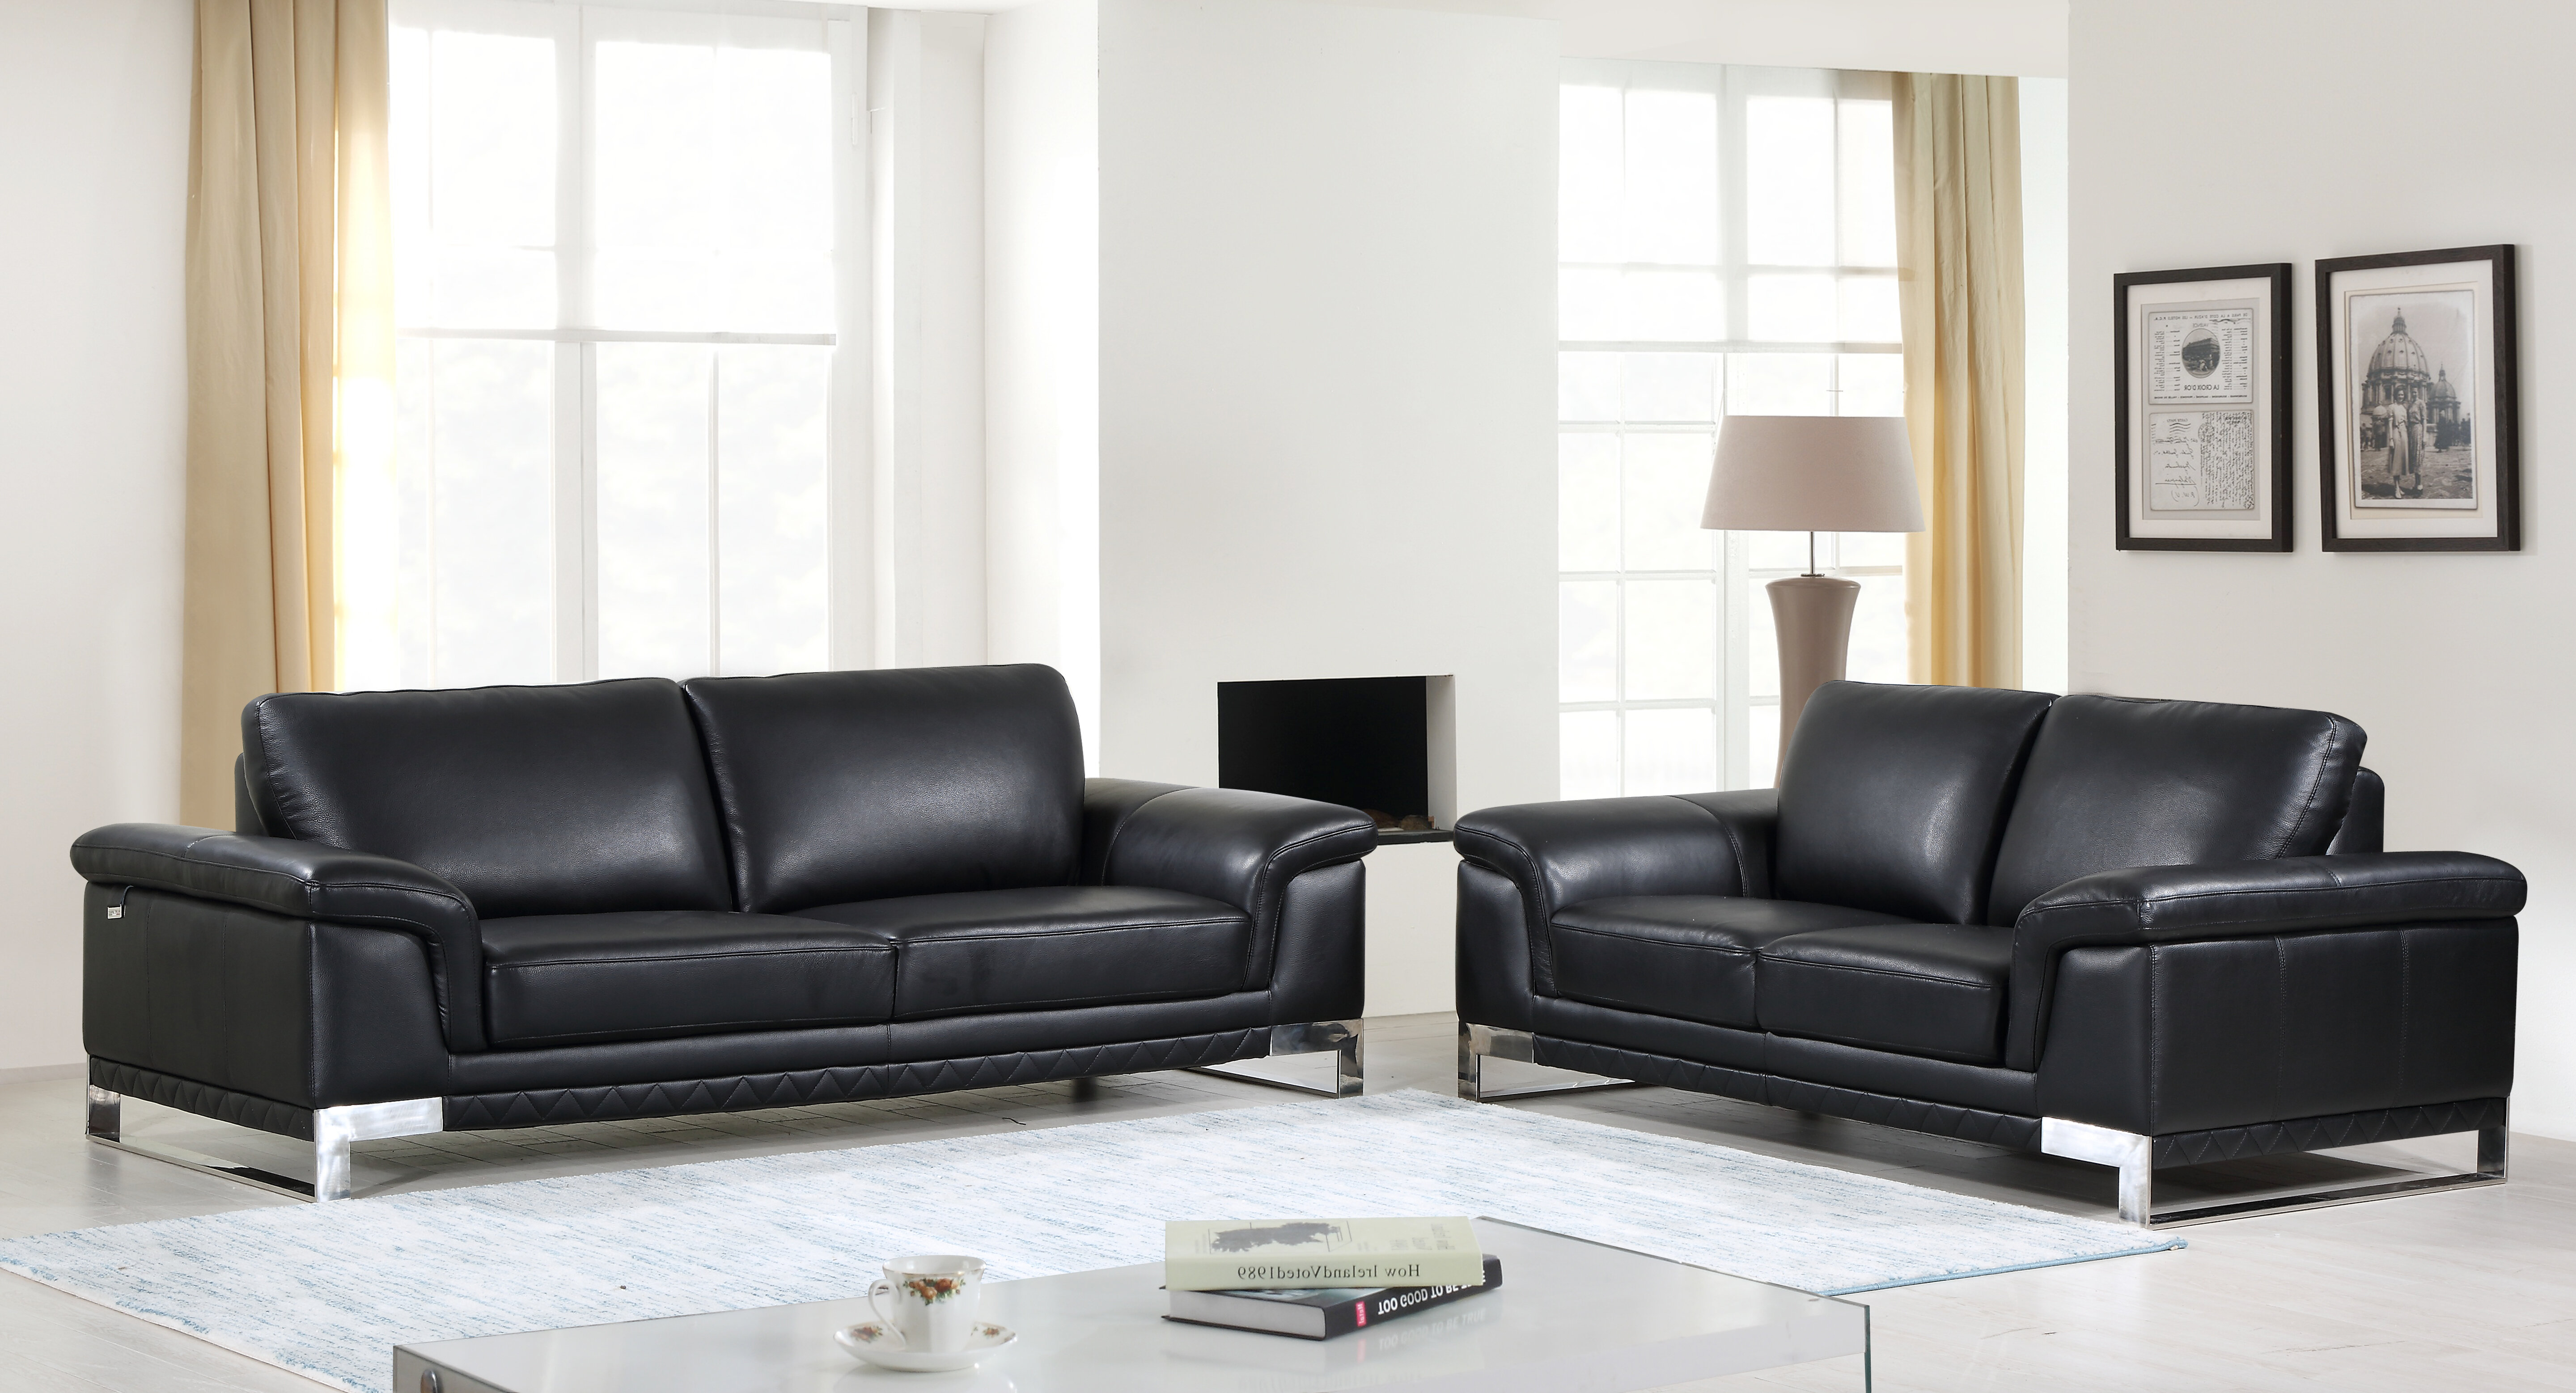 Orren Ellis Aiert Luxury Italian Leather 2 Piece Living Room Set Reviews Wayfair